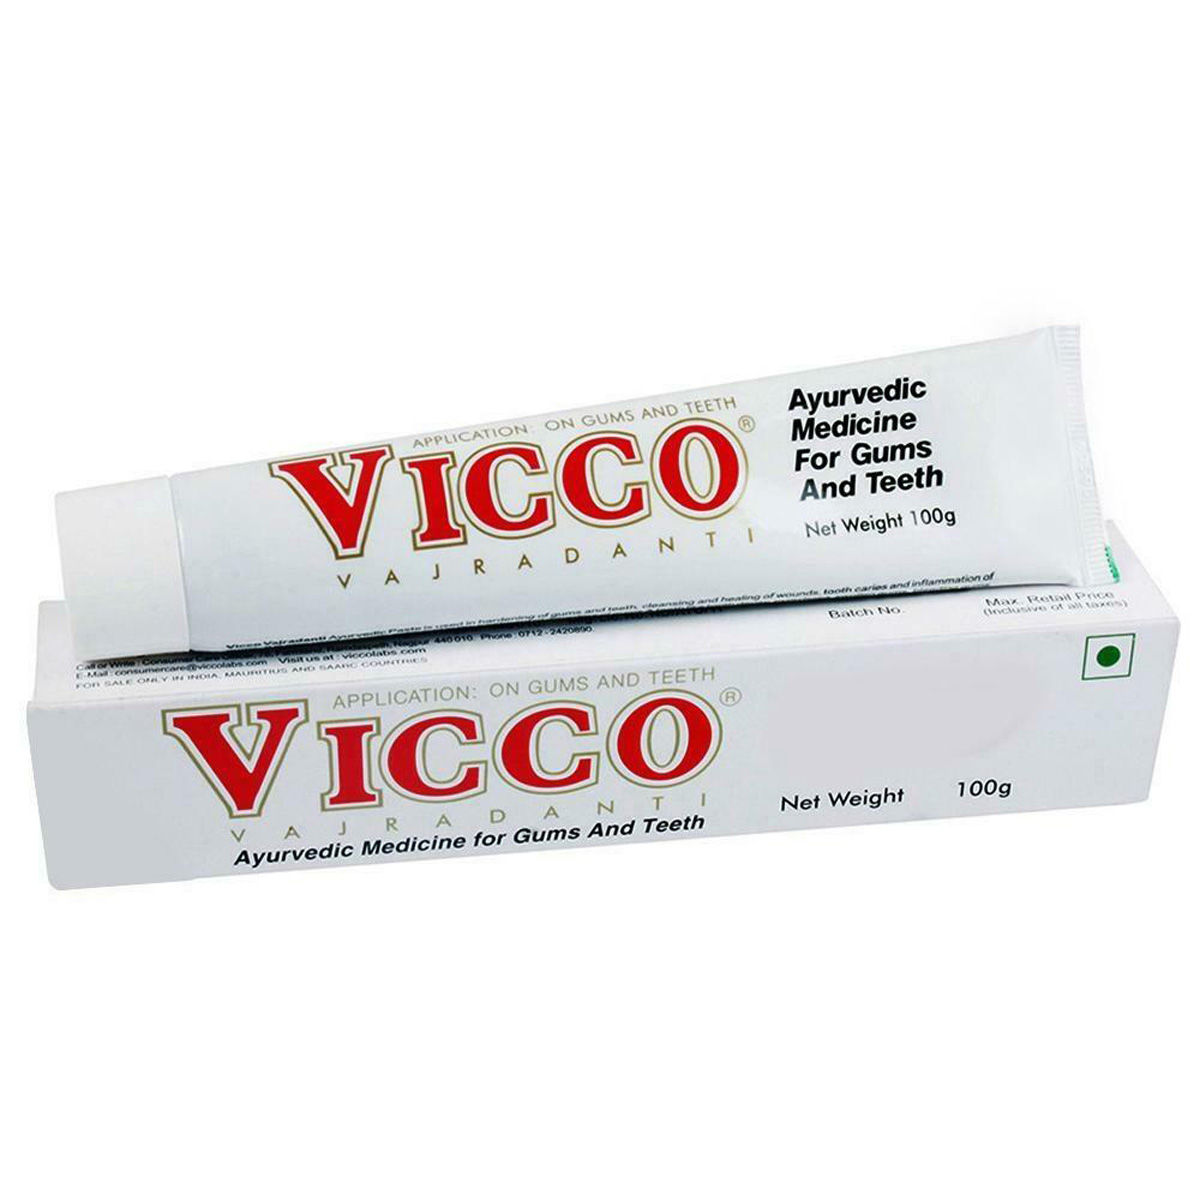 Vicco Vajradanti Ayurvedic Toothpaste, 100 gm, Pack of 1 